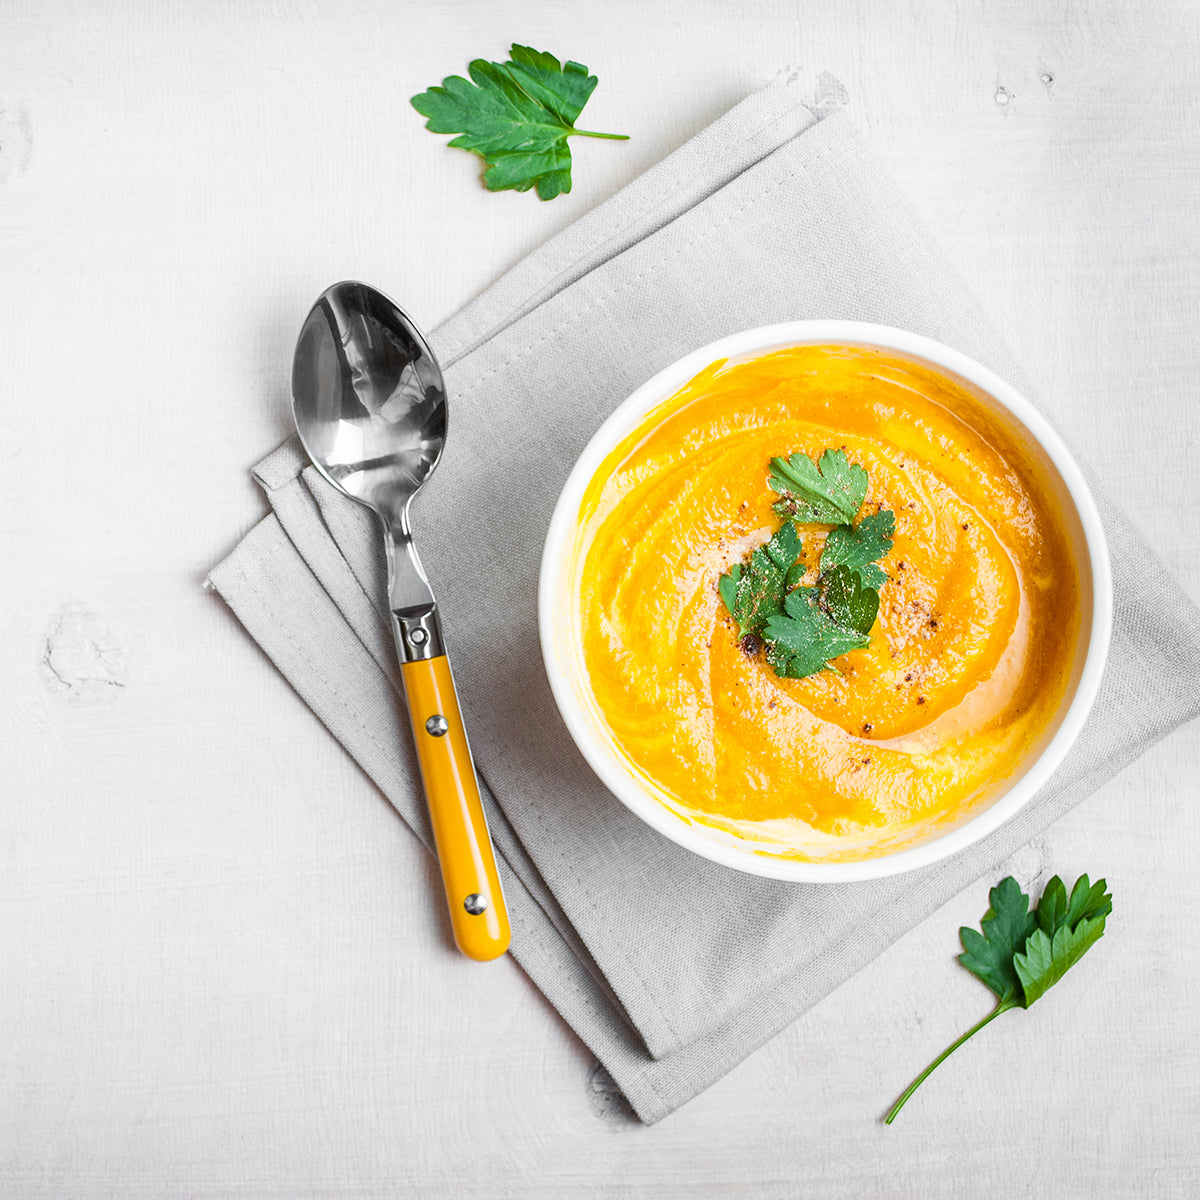 Vegan Pumpkin Soup with Hommus (makes 6 serves)